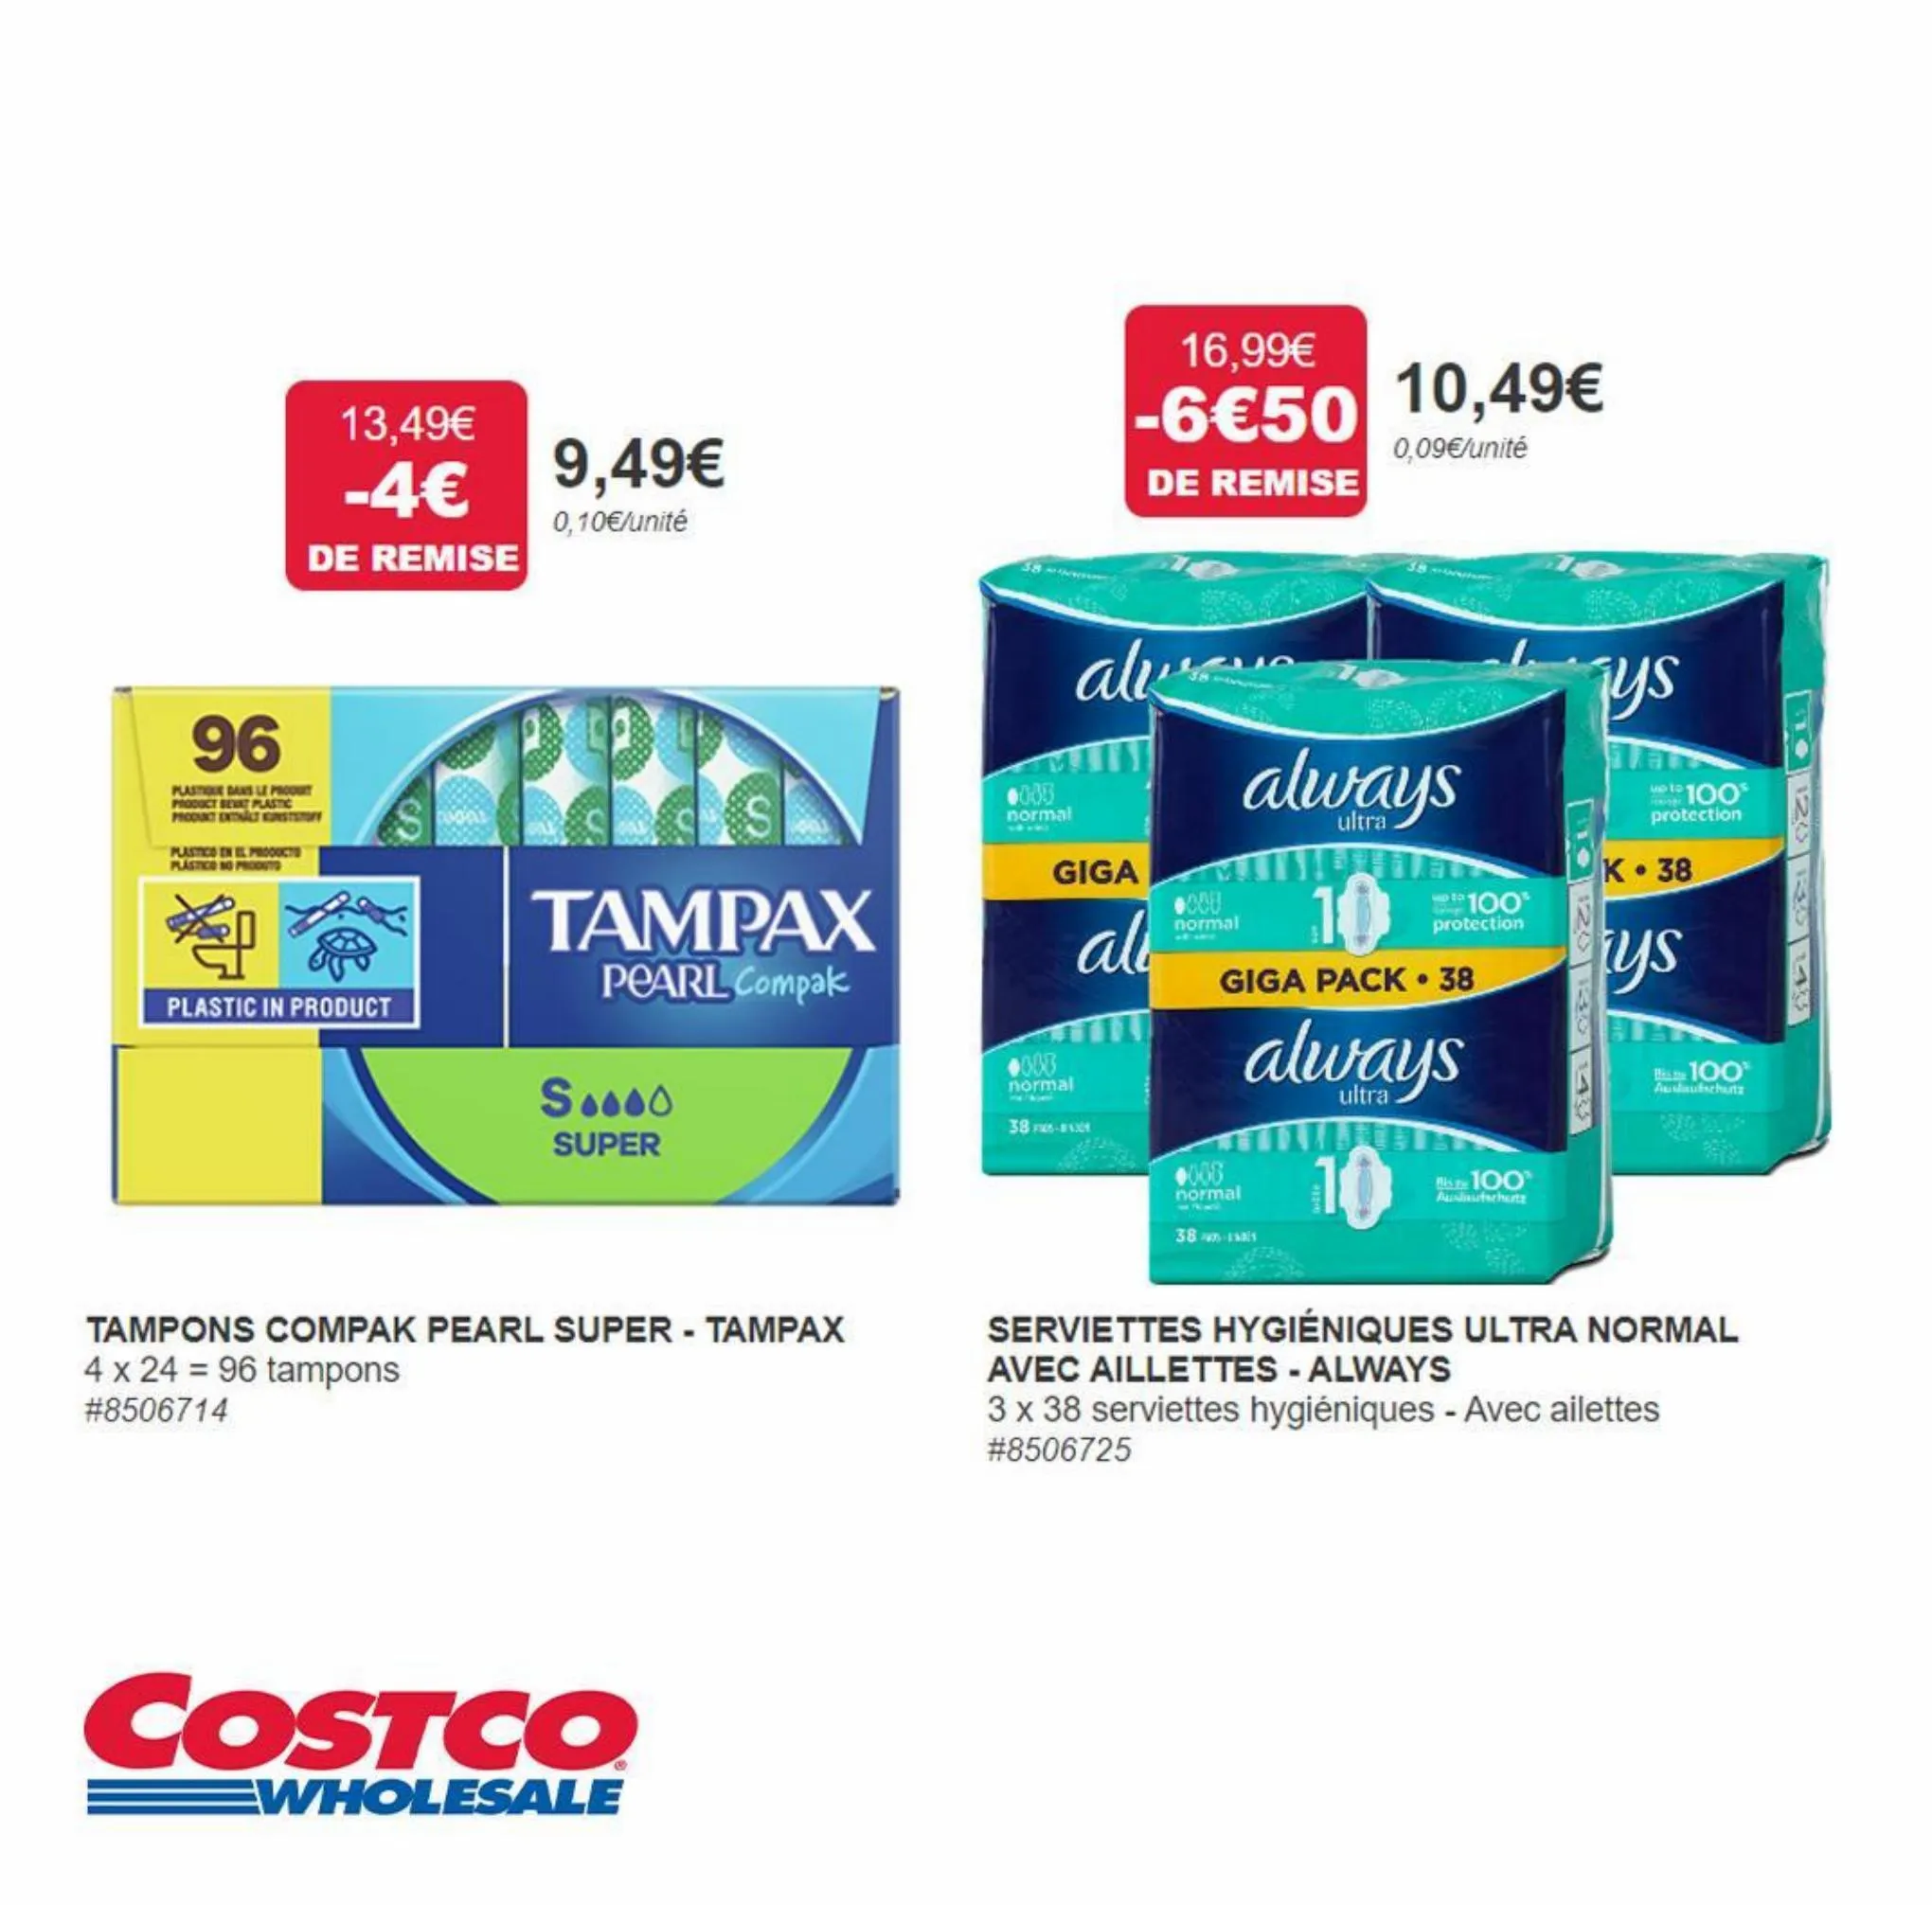 Catalogue Costco Wholesale, page 00006